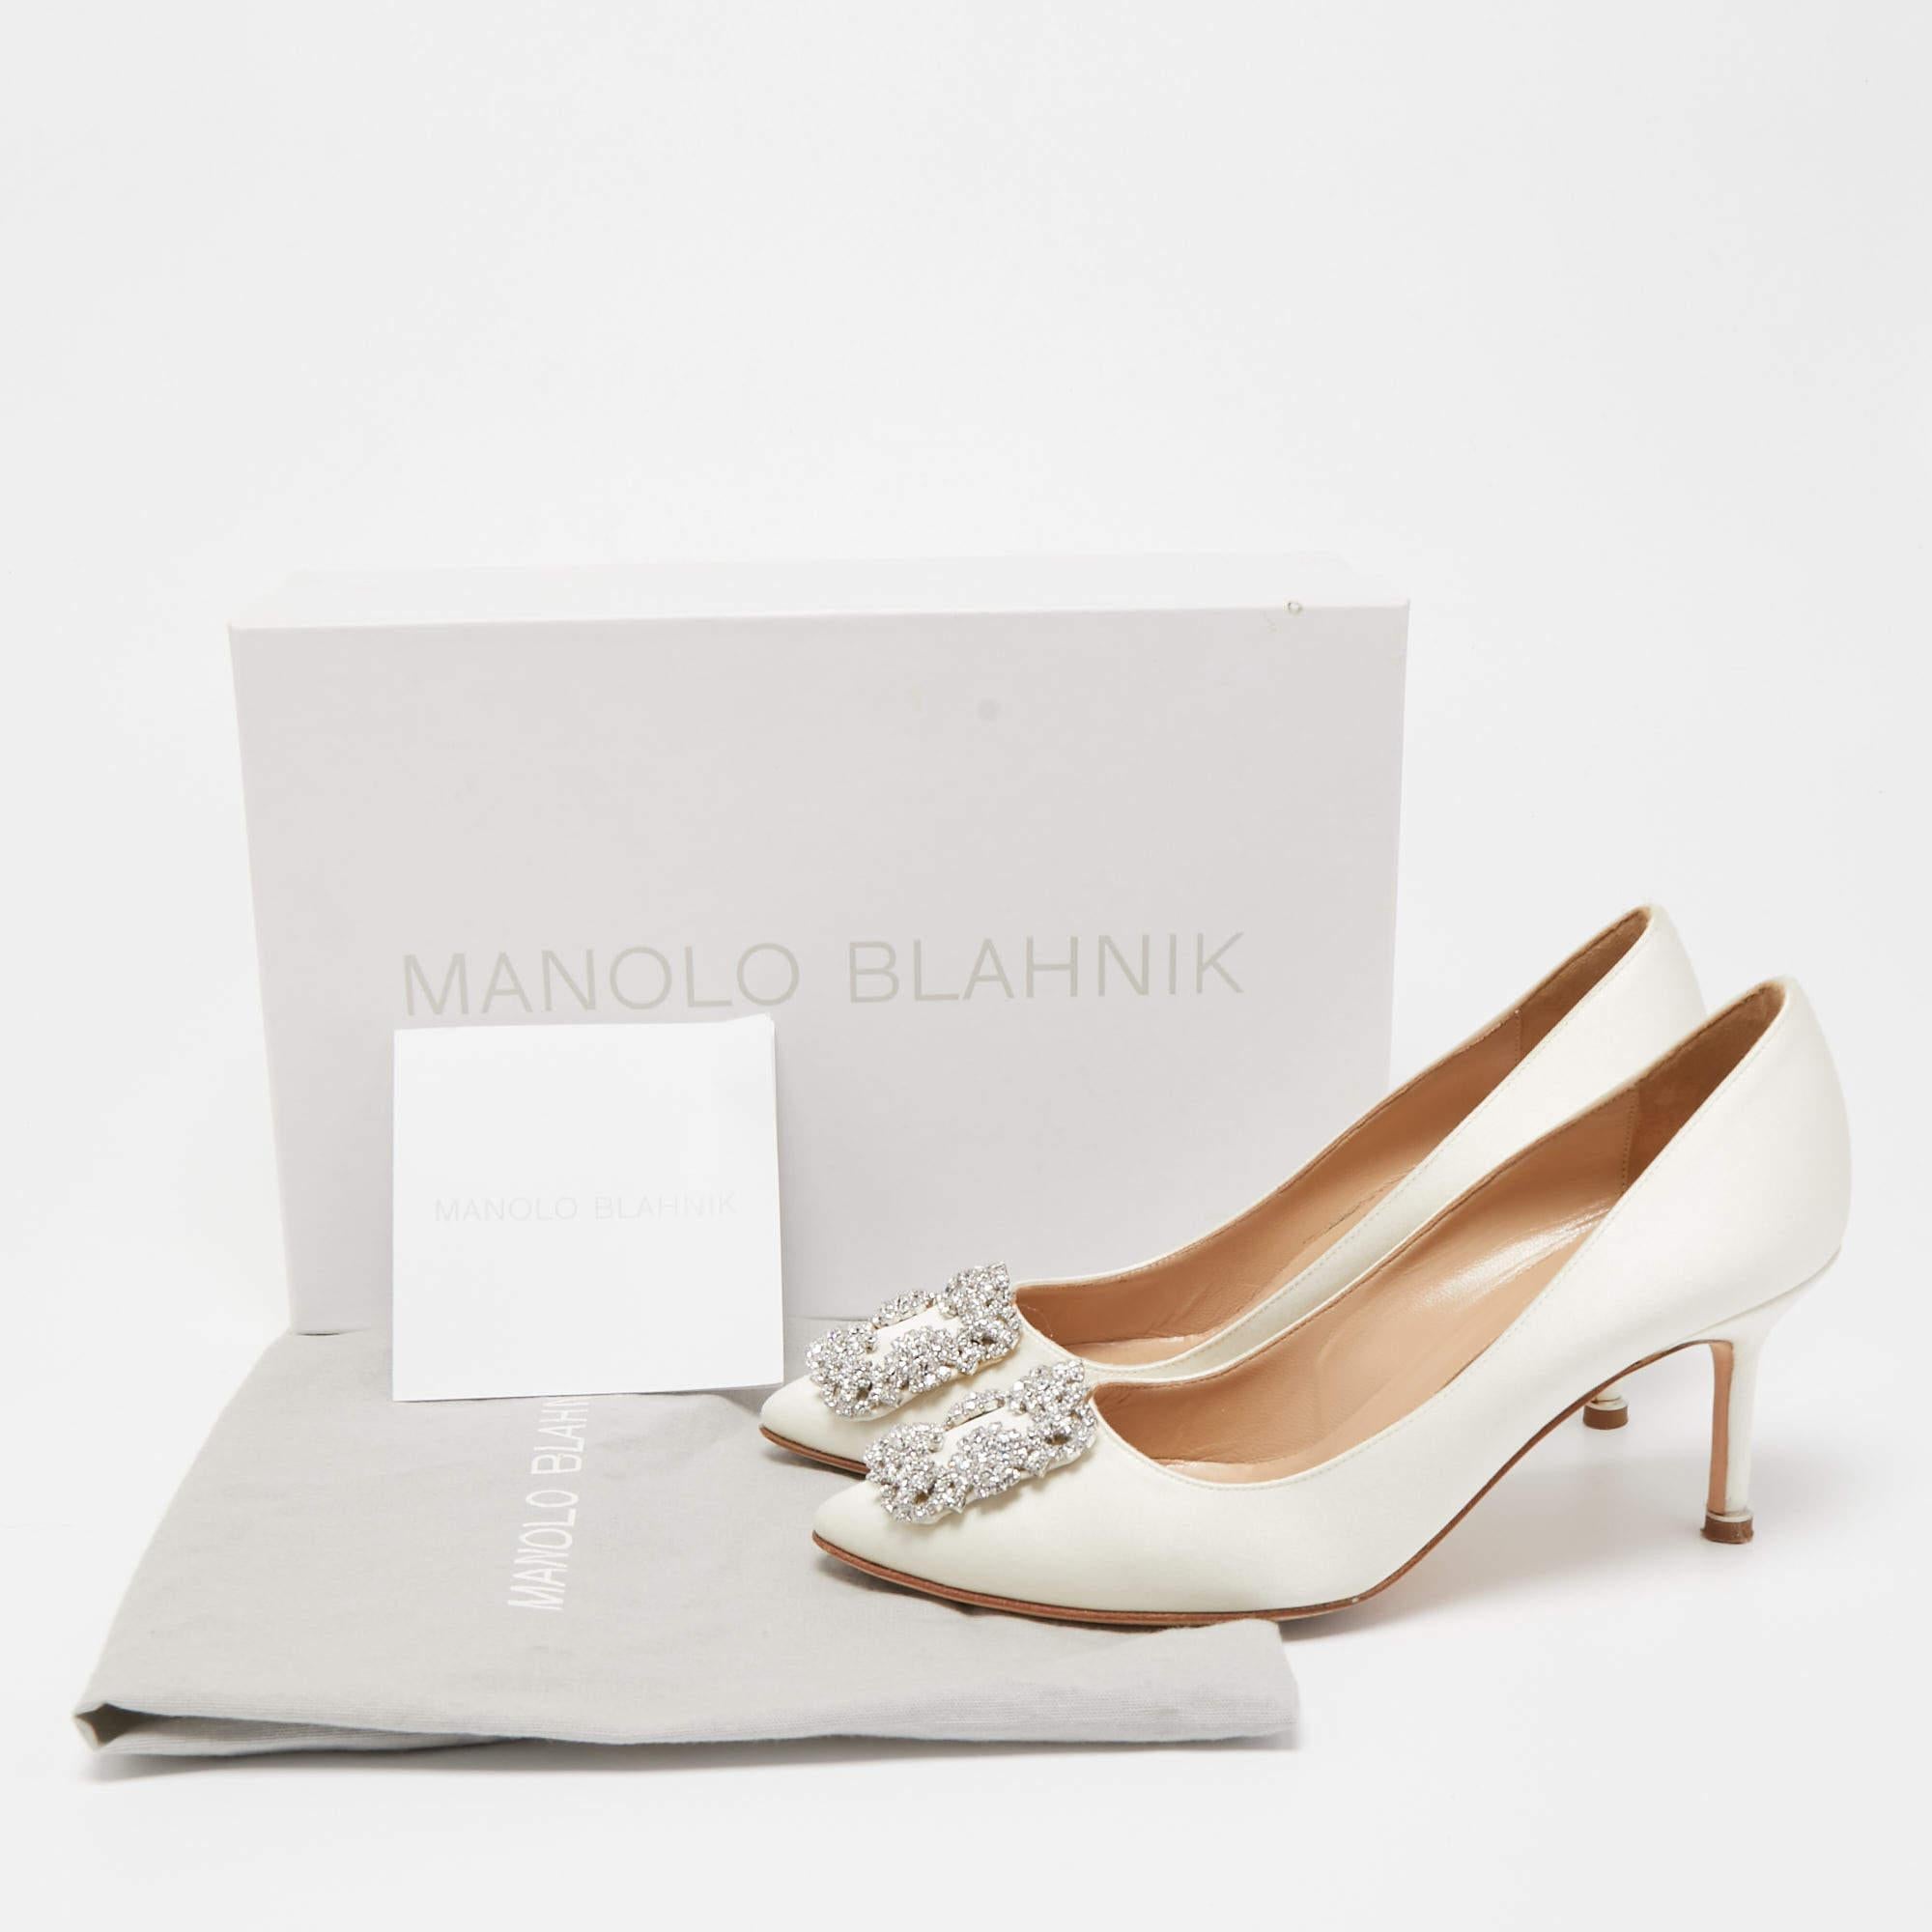 Manolo Blahnik White Satin Hangisi Pumps Size 36.5 4